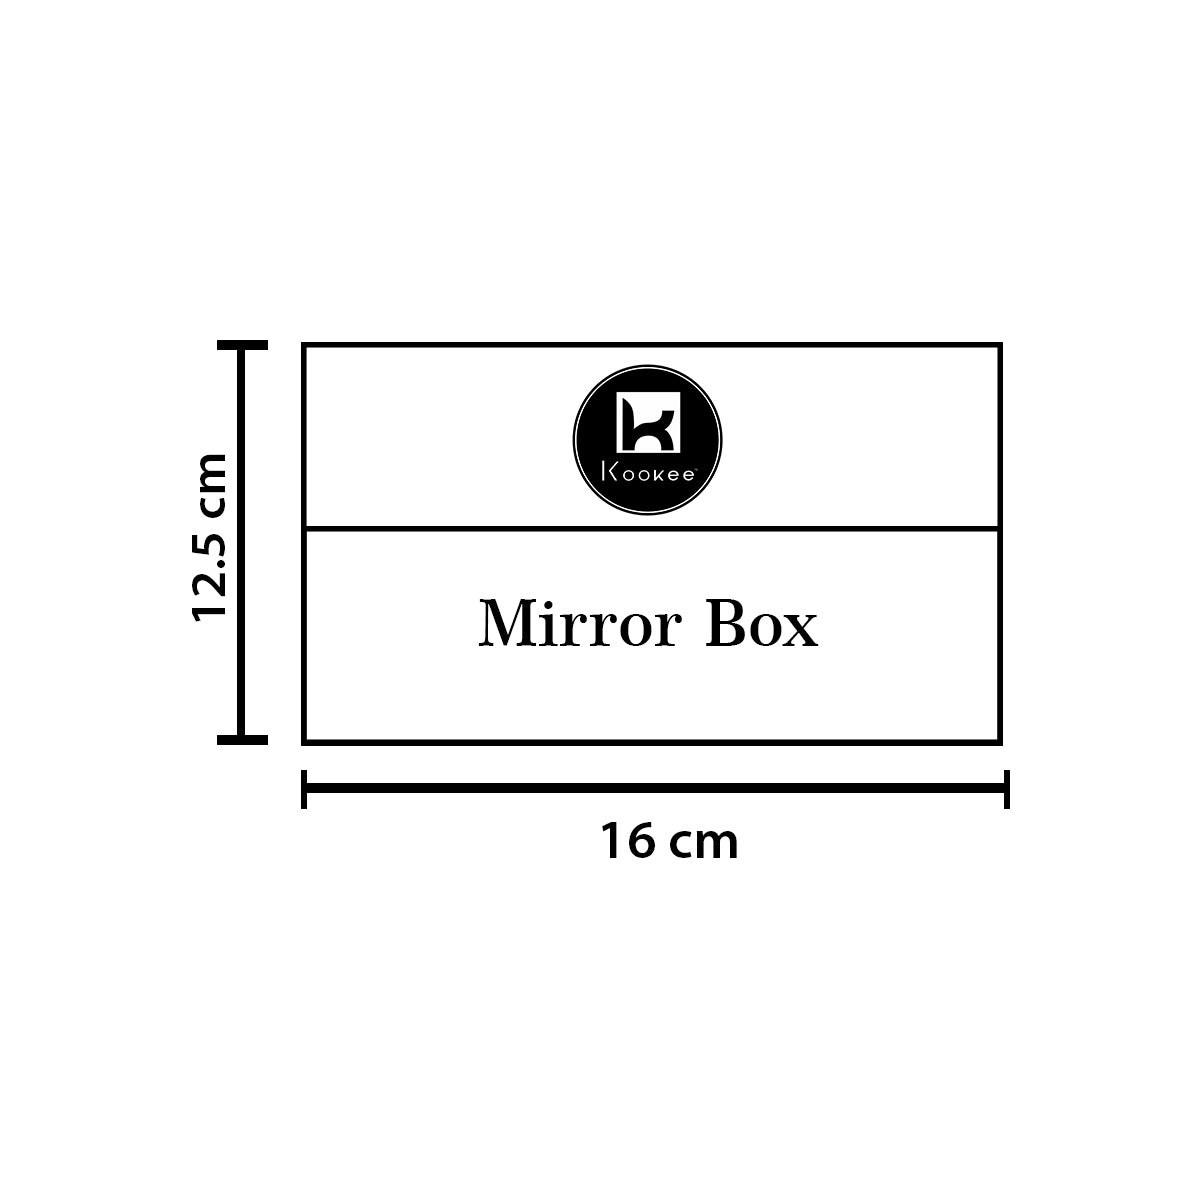 Mirror GLASS DOUBLE DECK STORAGE BOX SILVER